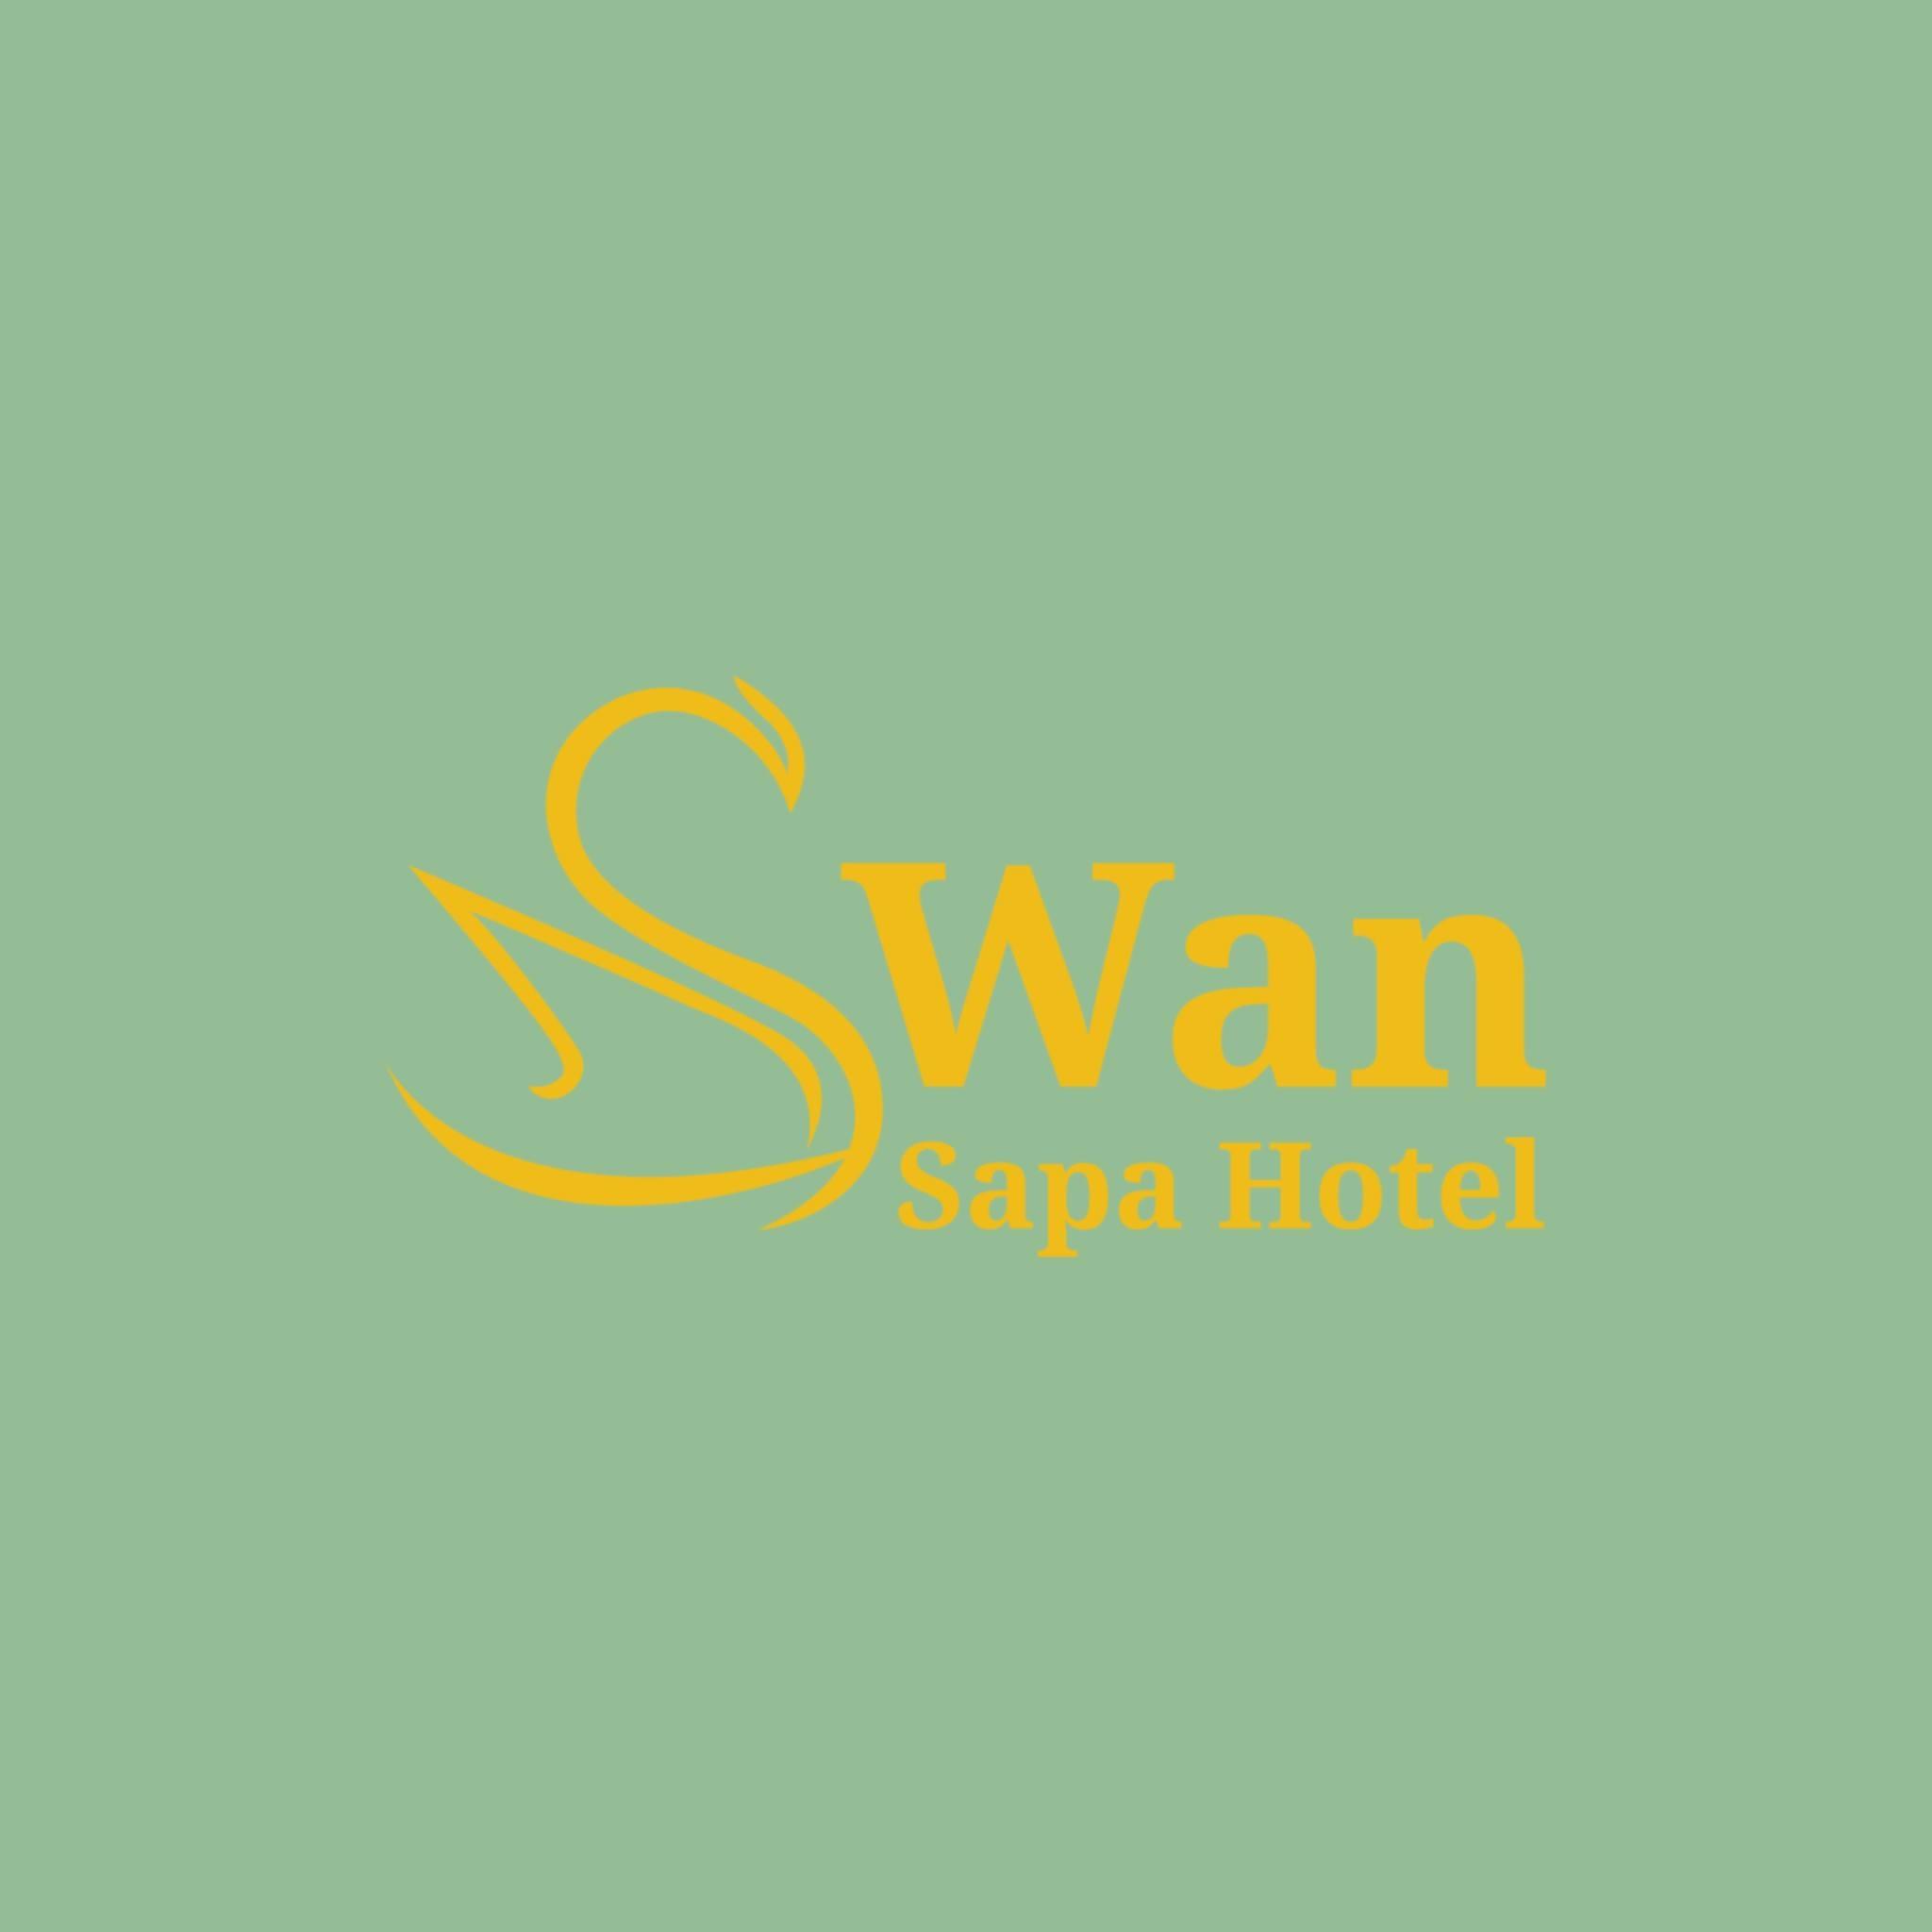 Swan Sapa Hotel